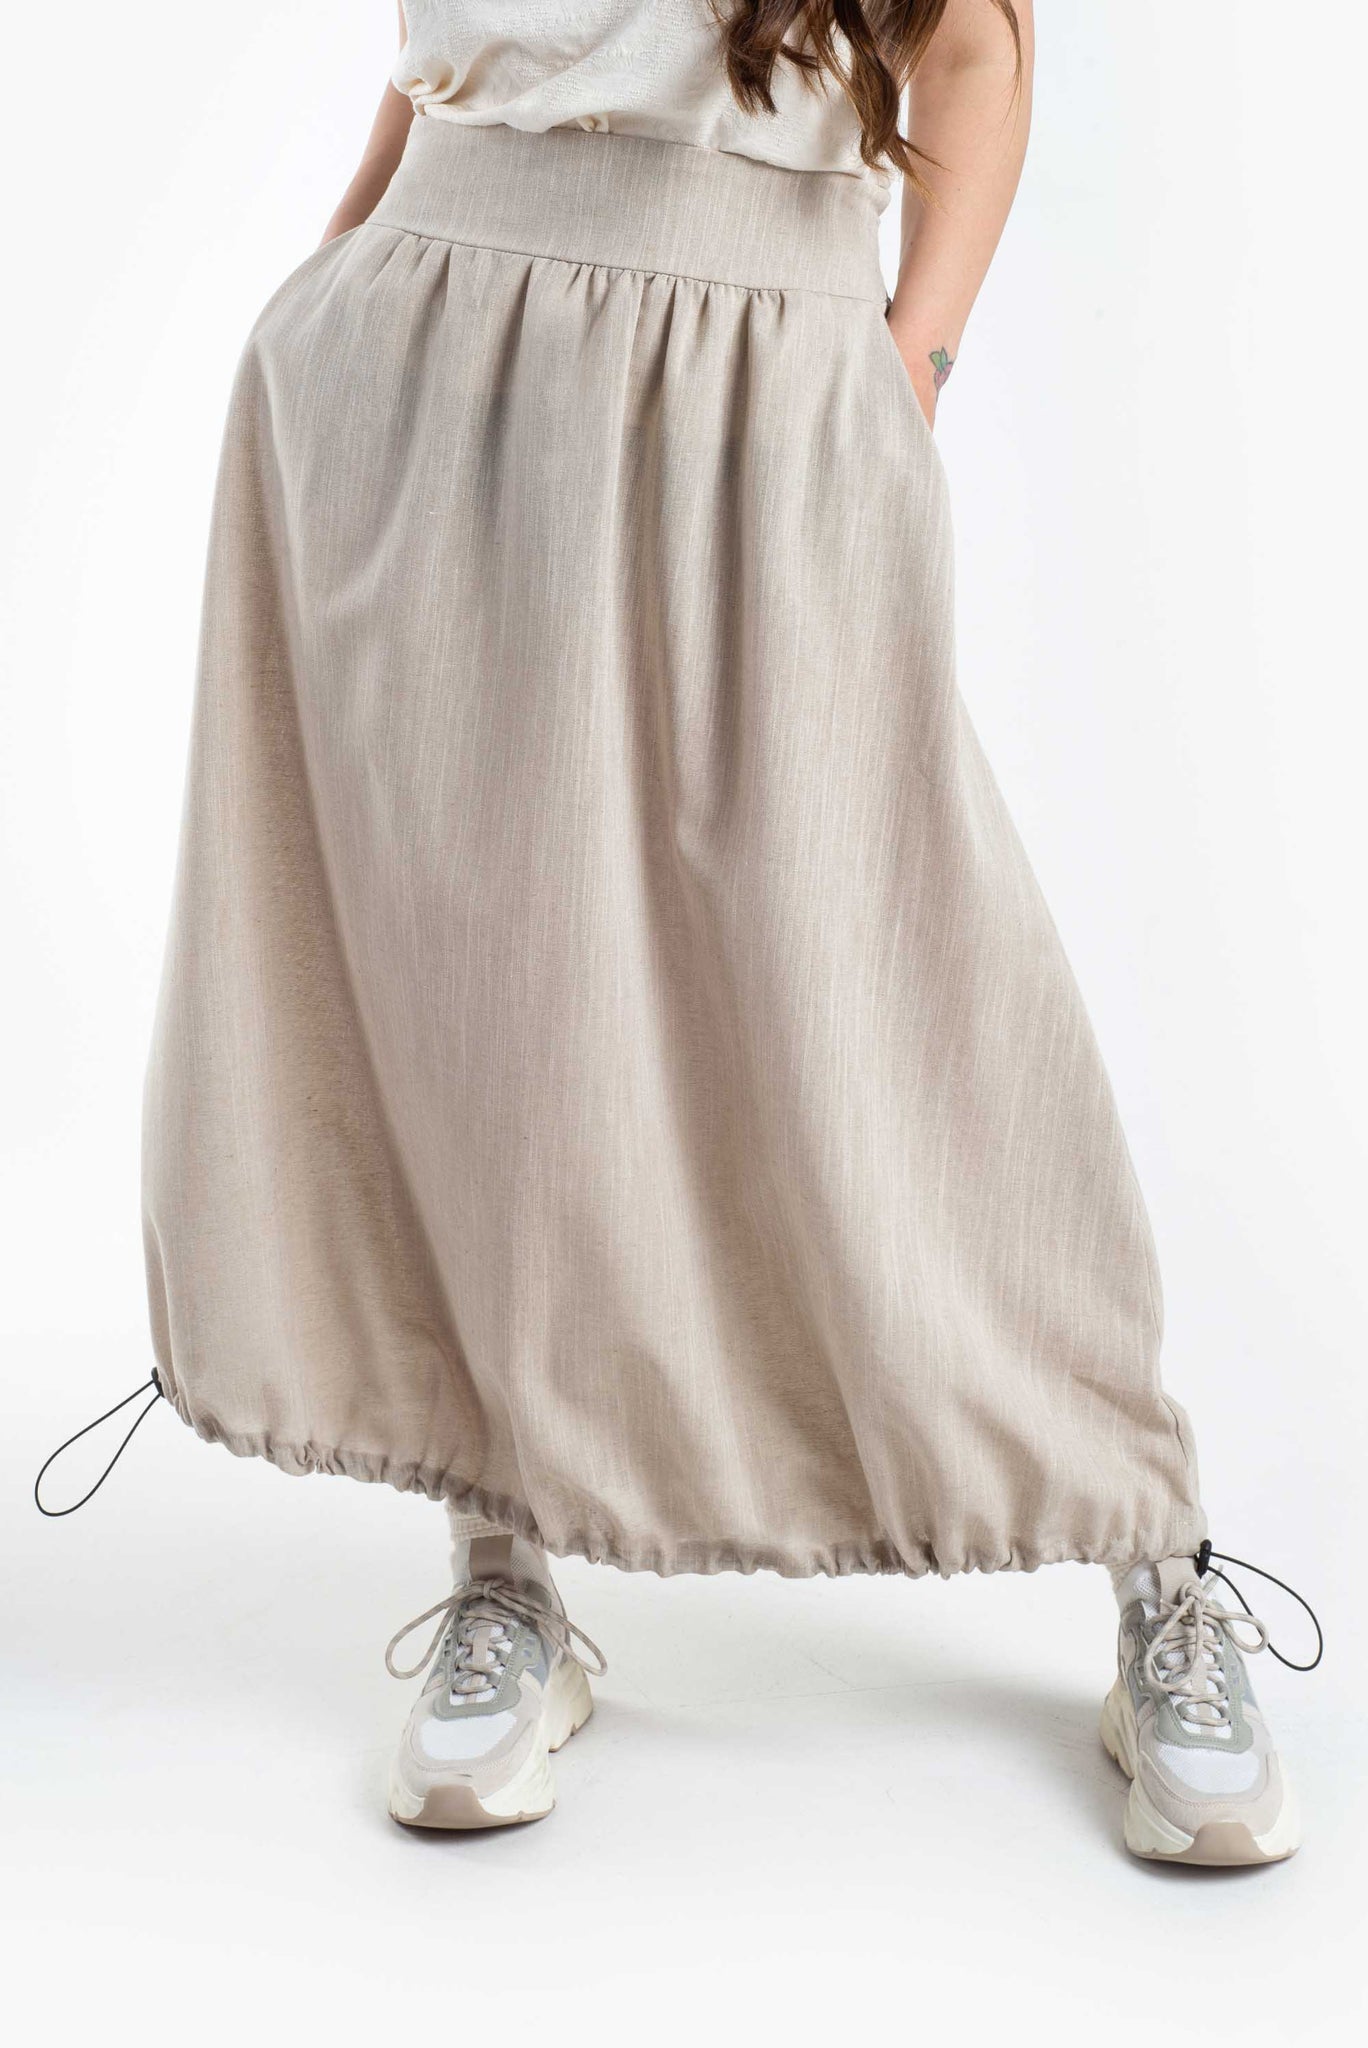 Monochrome skirt